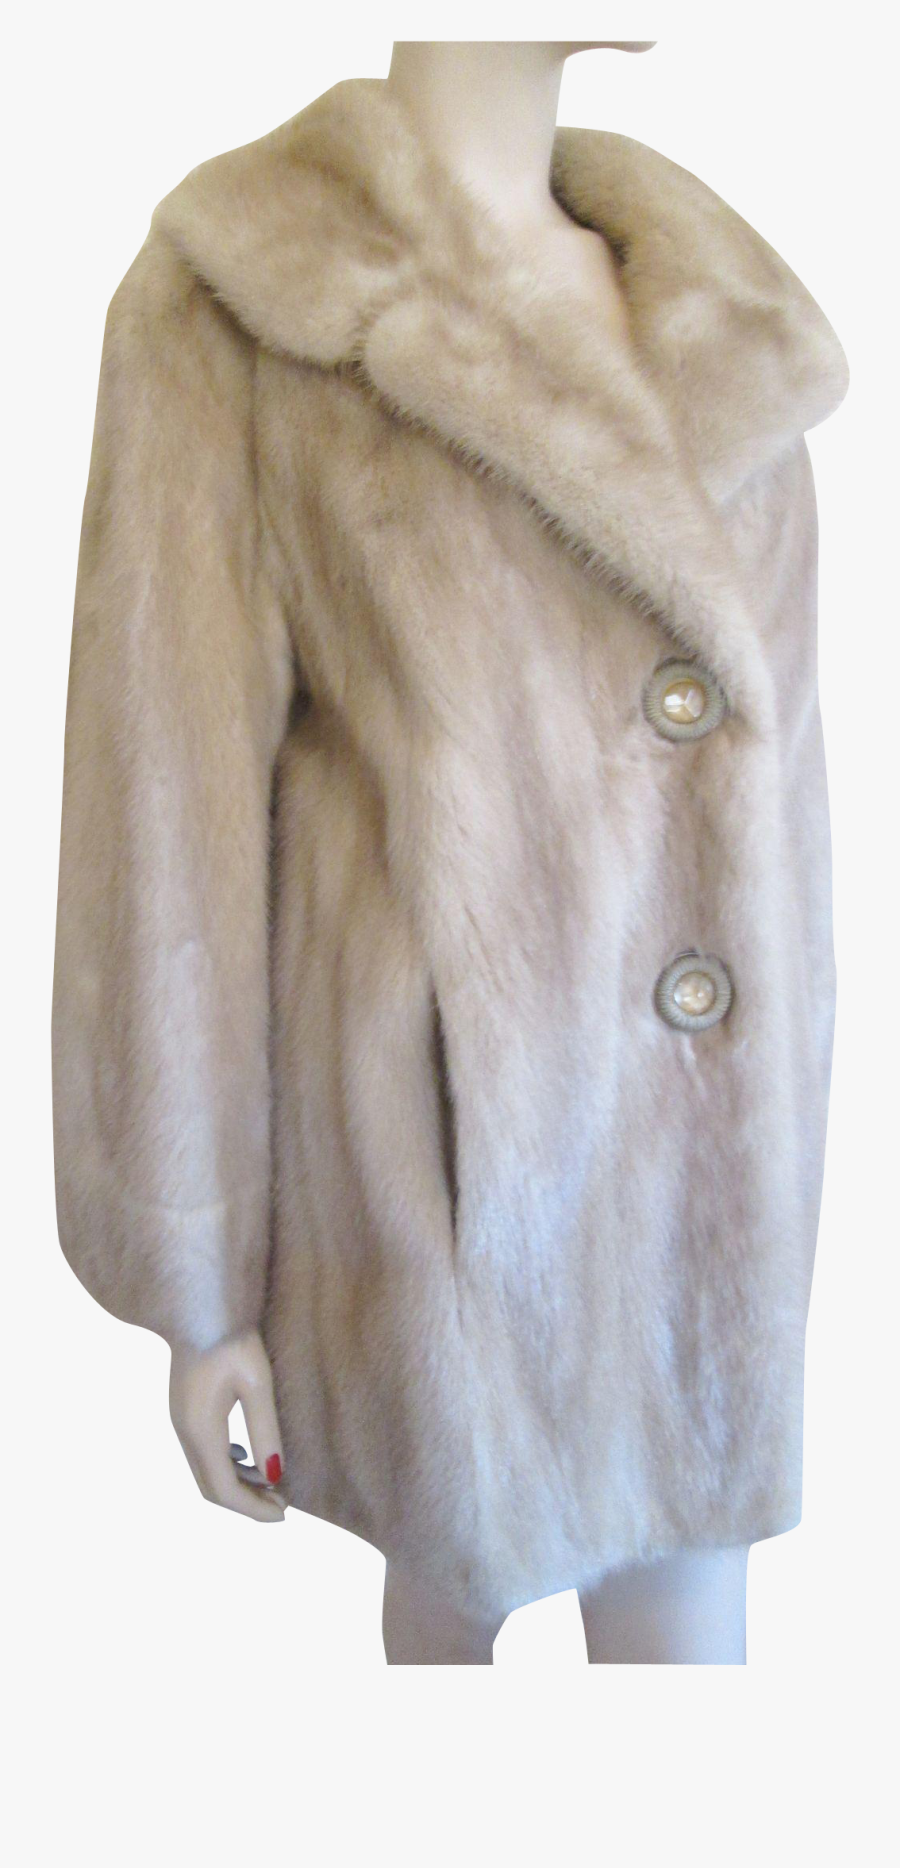 White Fur Coat Png Image - Fur Coat With Buttons, Transparent Clipart